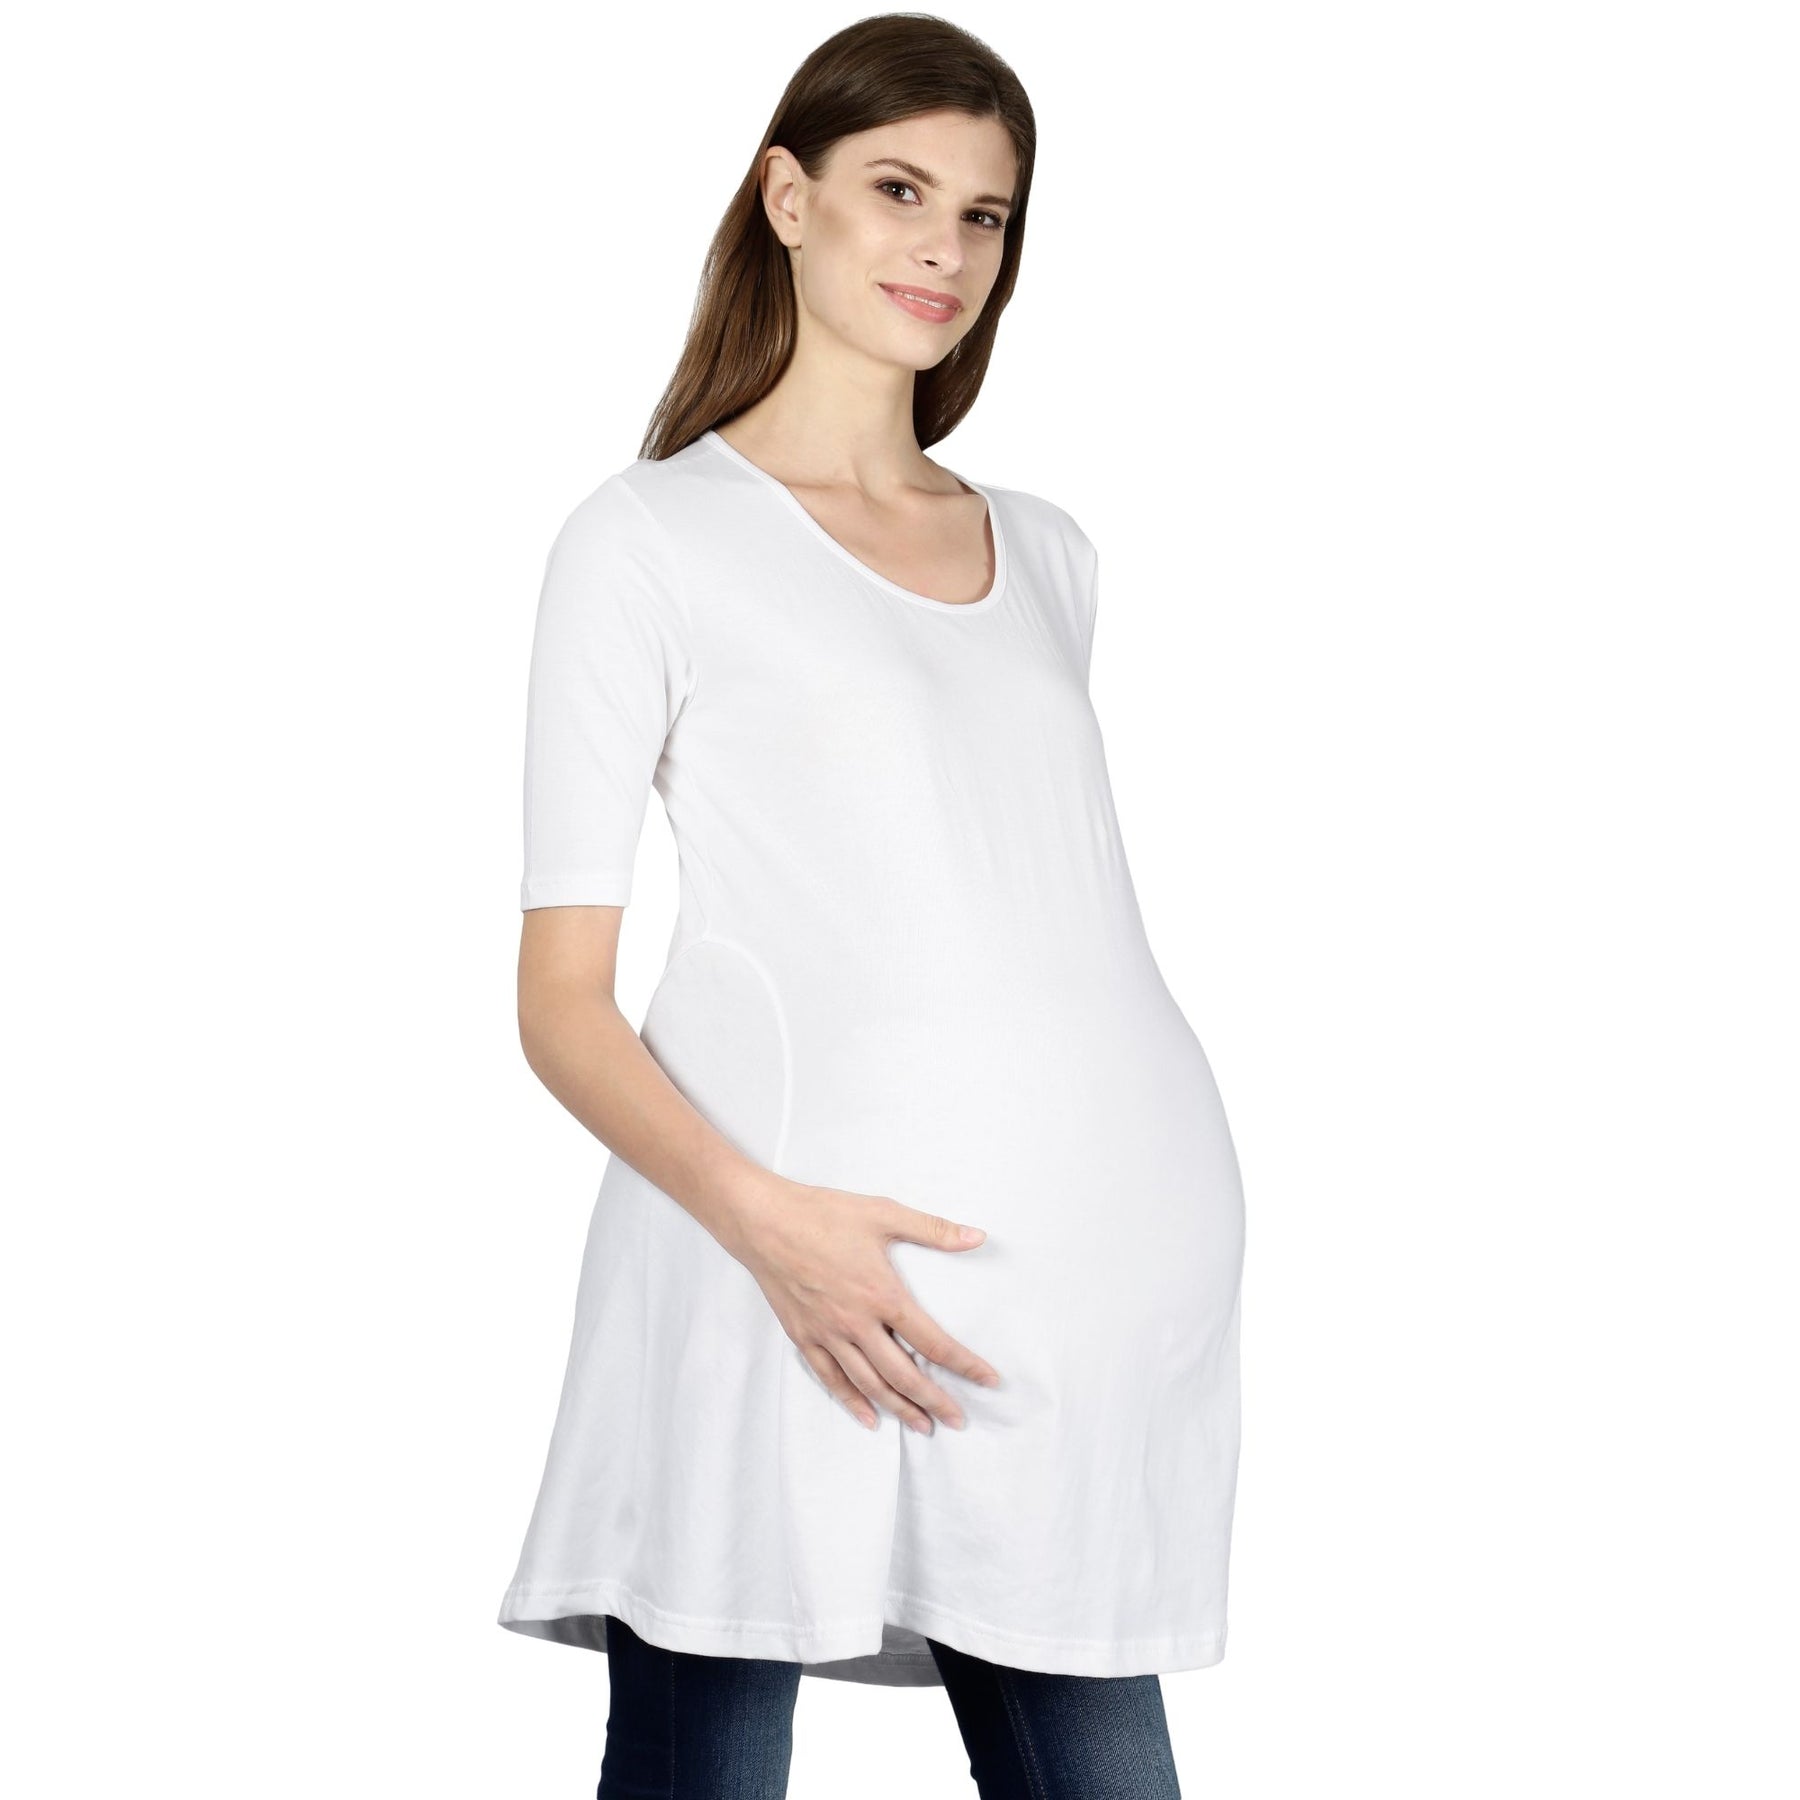 Women's Maternity T-shirt